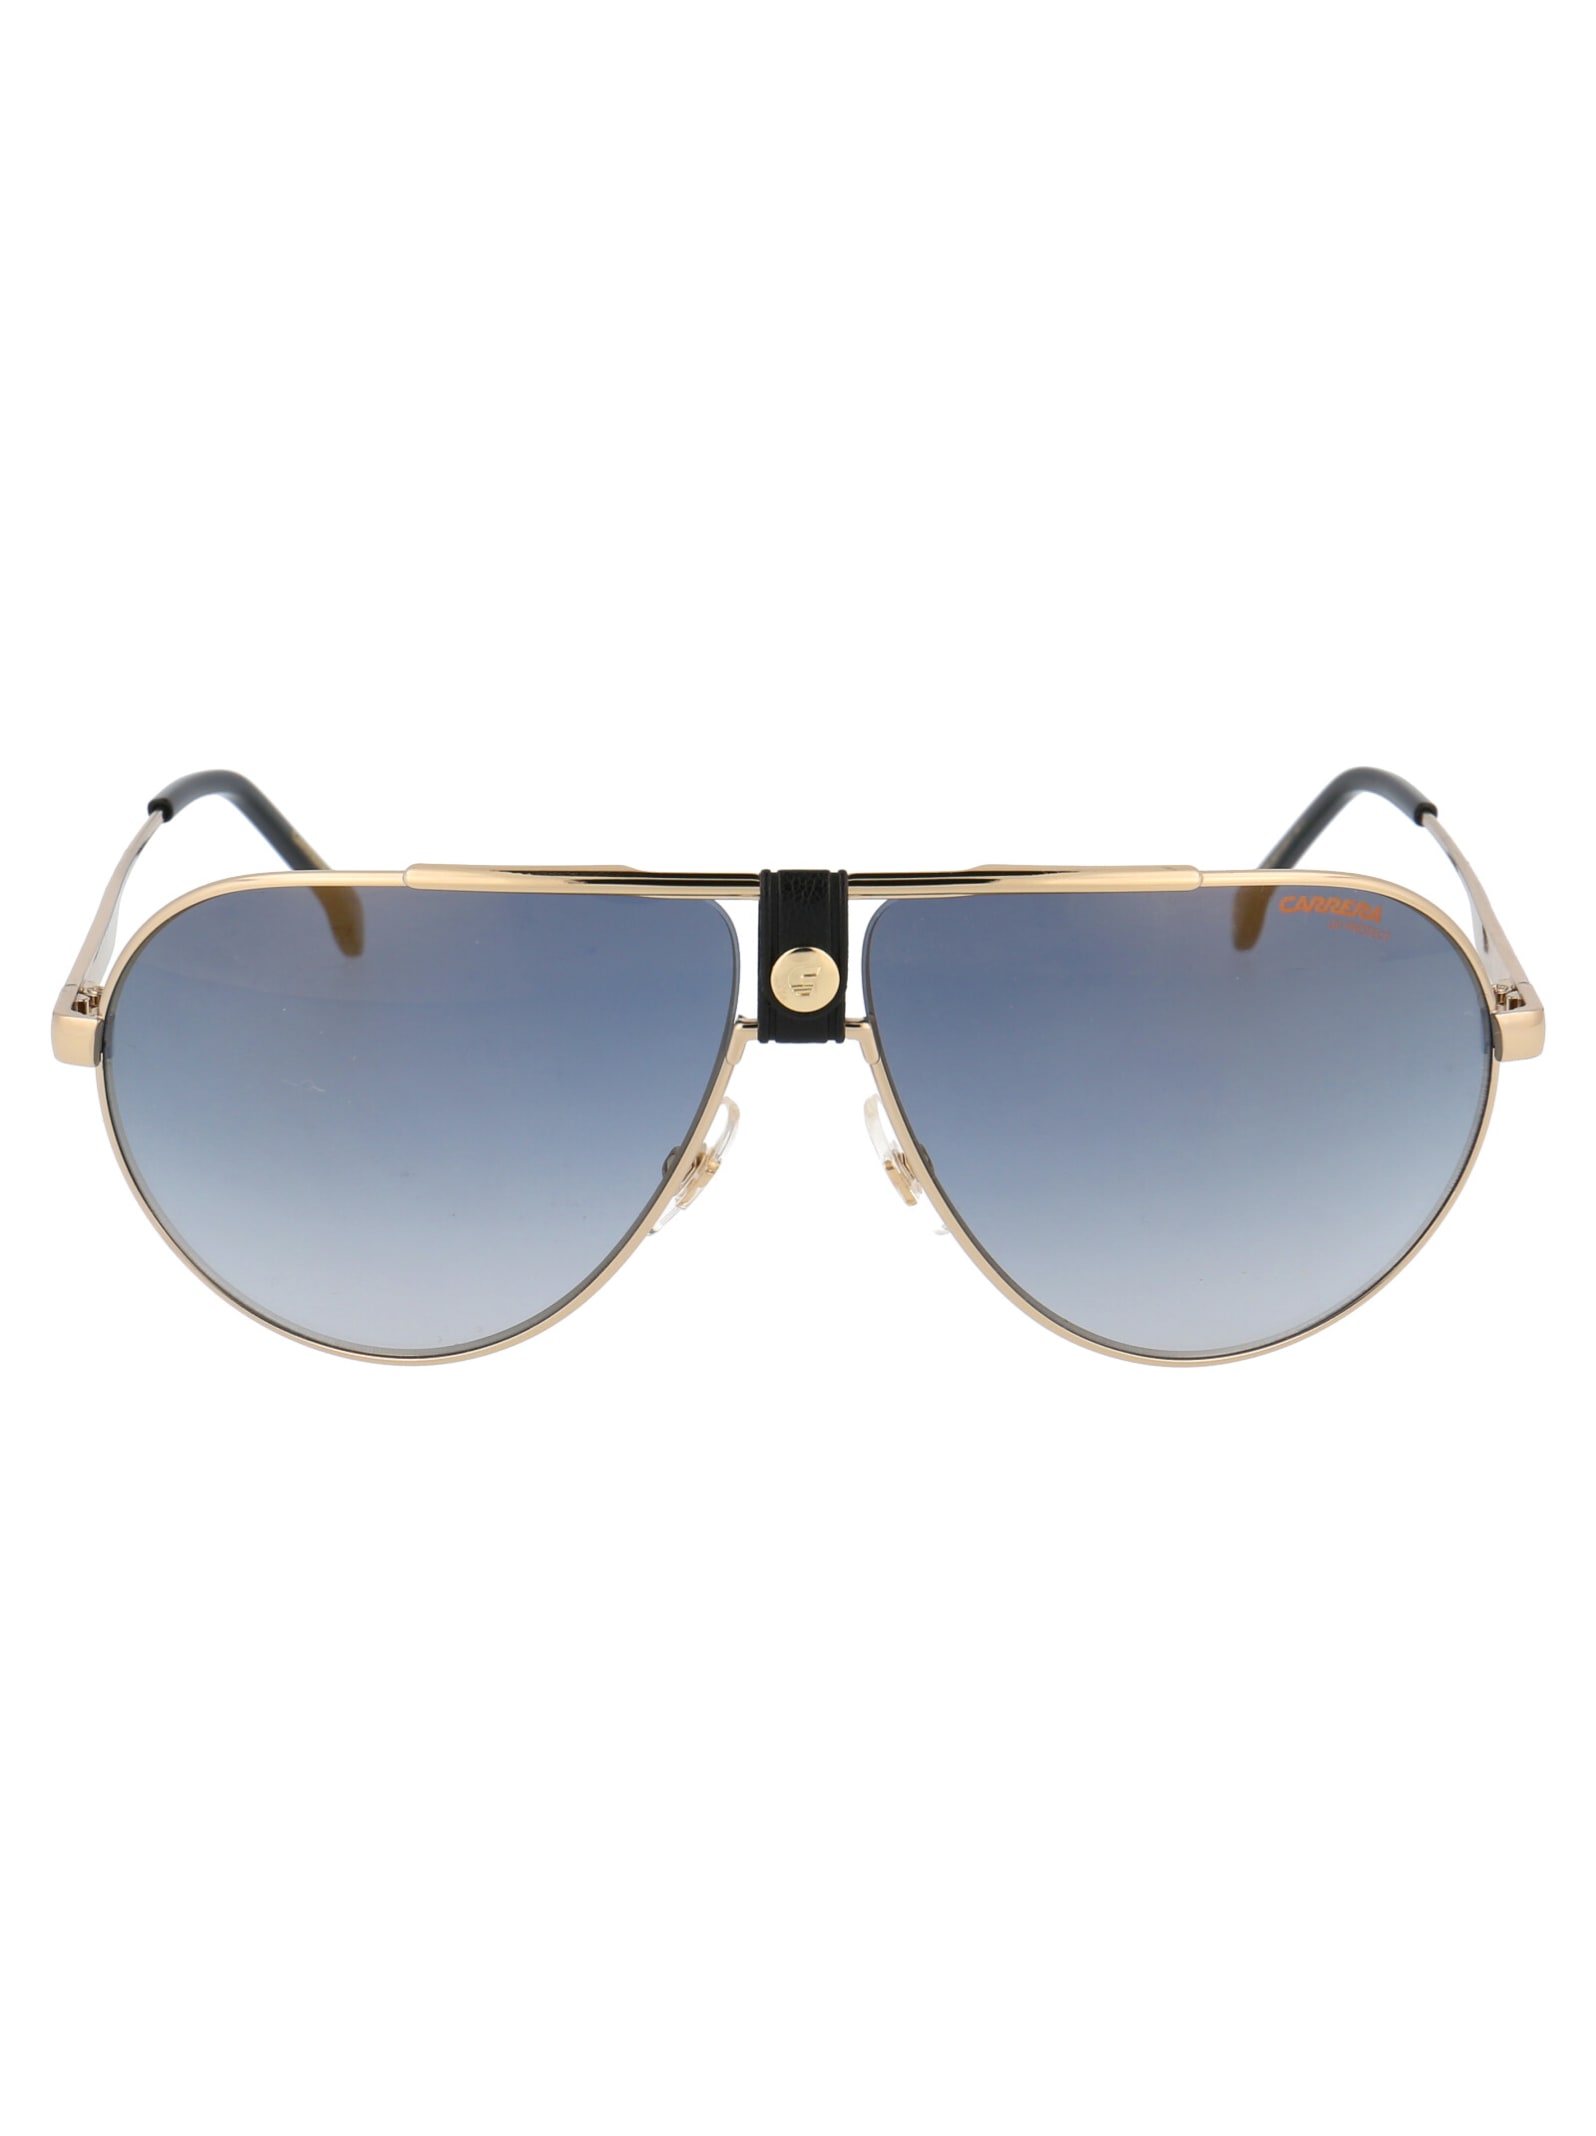 Carrera 1033/s Sunglasses